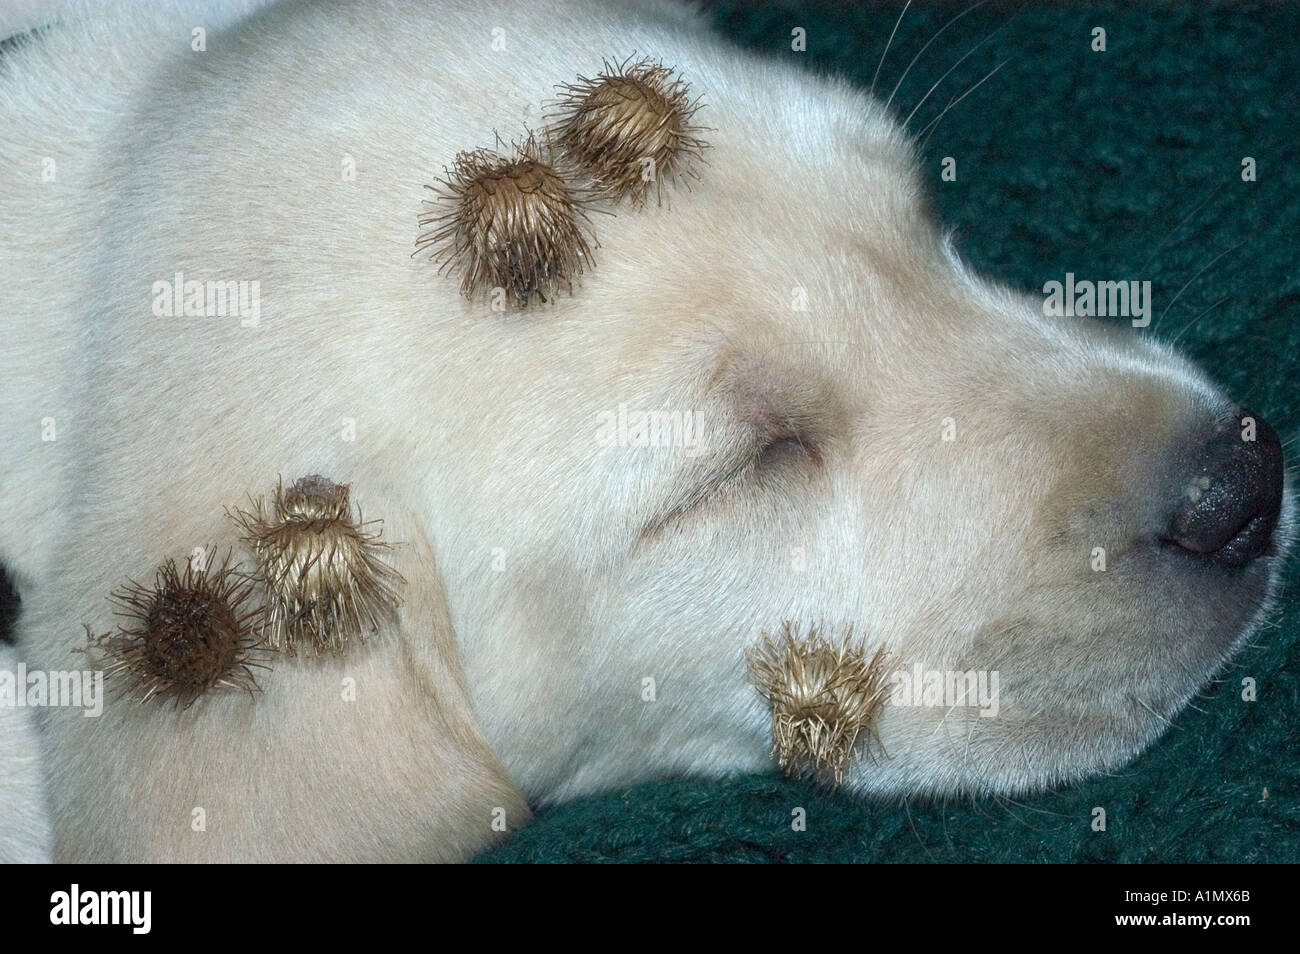 burdock burs on yellow lab puppy Stock Photo